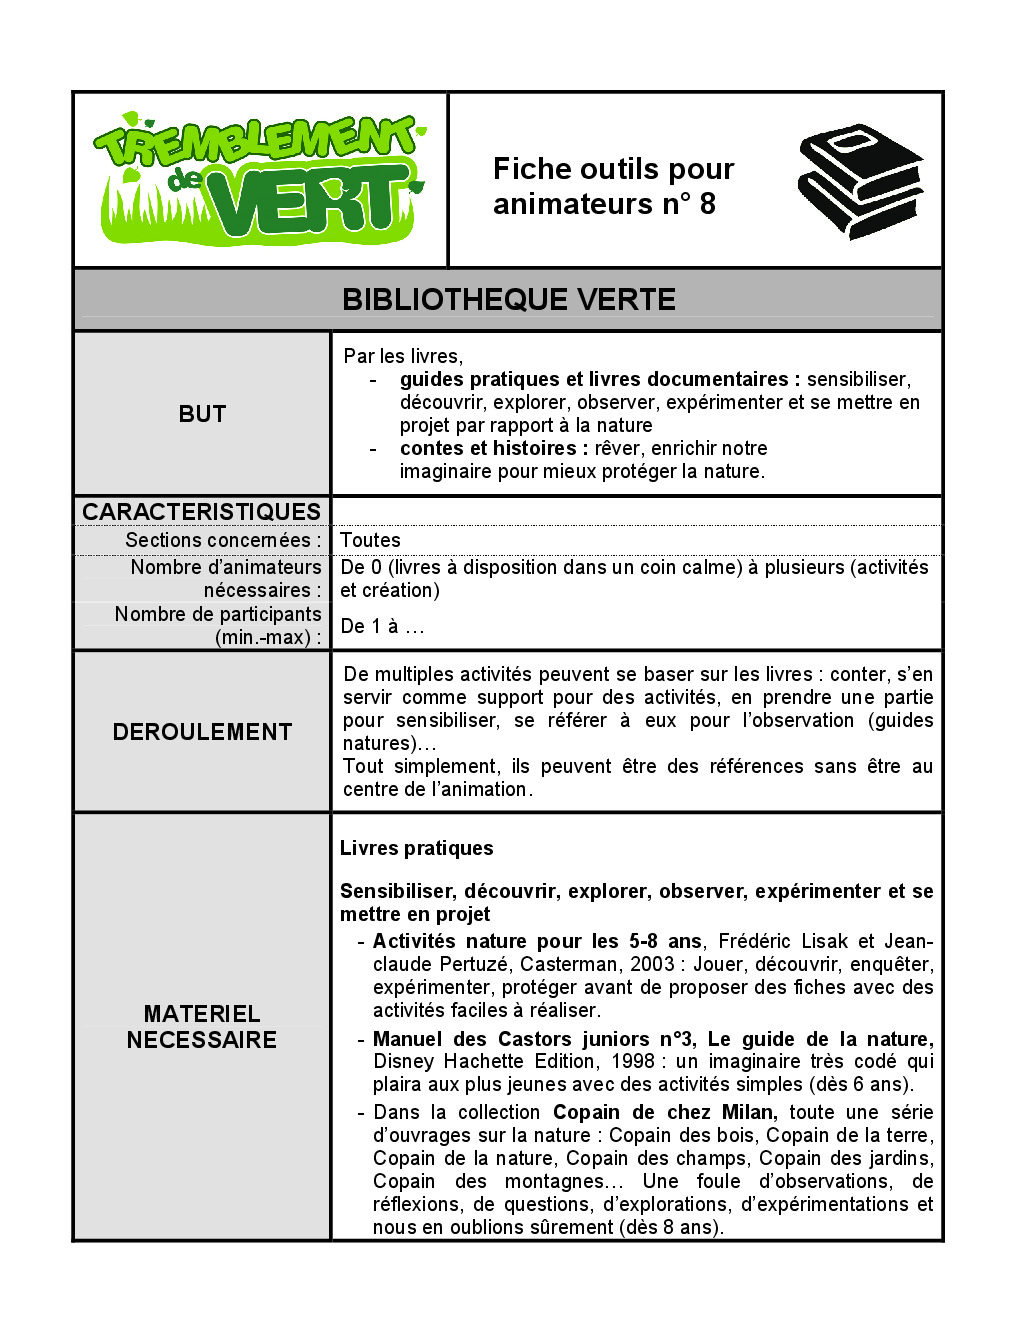 FT_TV_OA_08_bibliotheque_verte.pdf